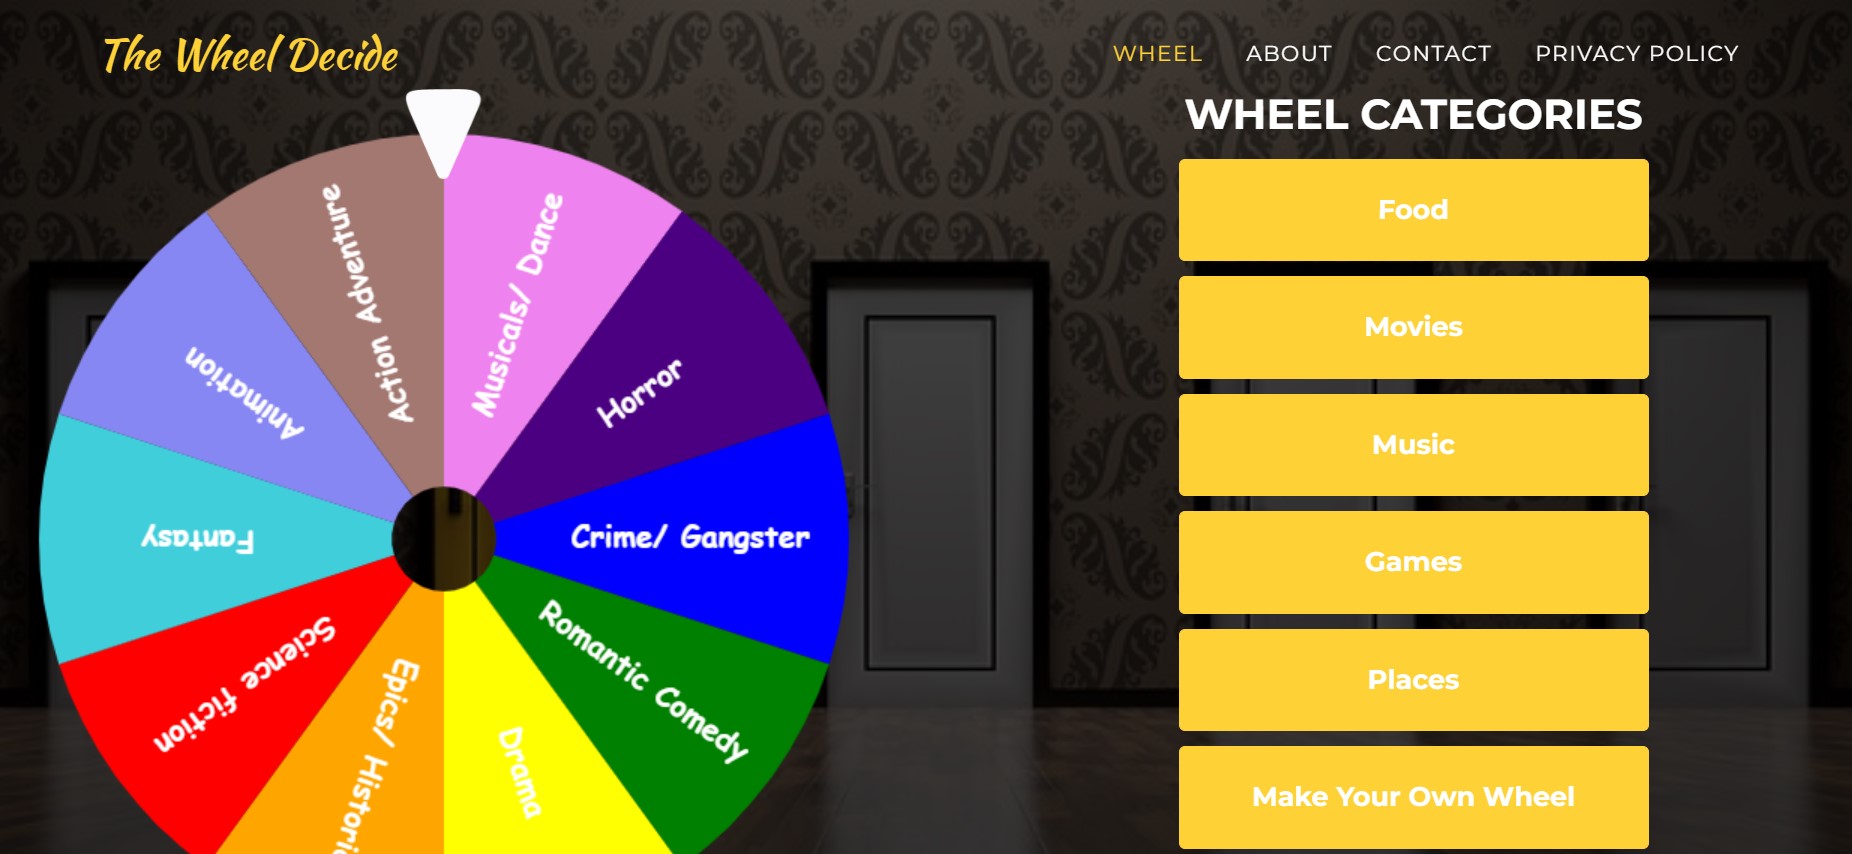 Wheel Decide